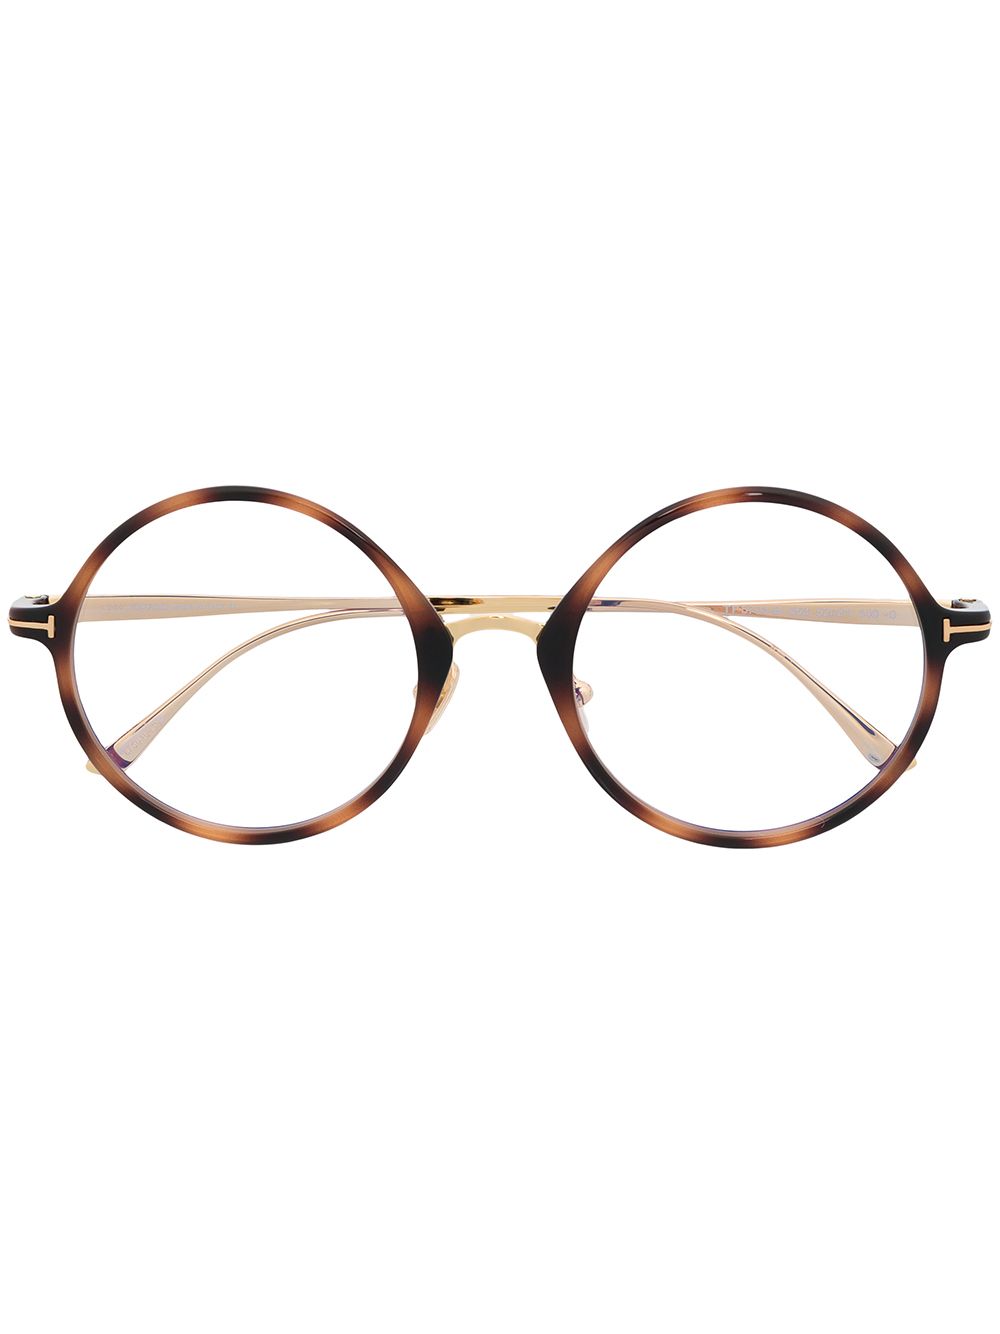 TOM FORD Eyewear Tortoiseshell Round Frame Glasses - Farfetch